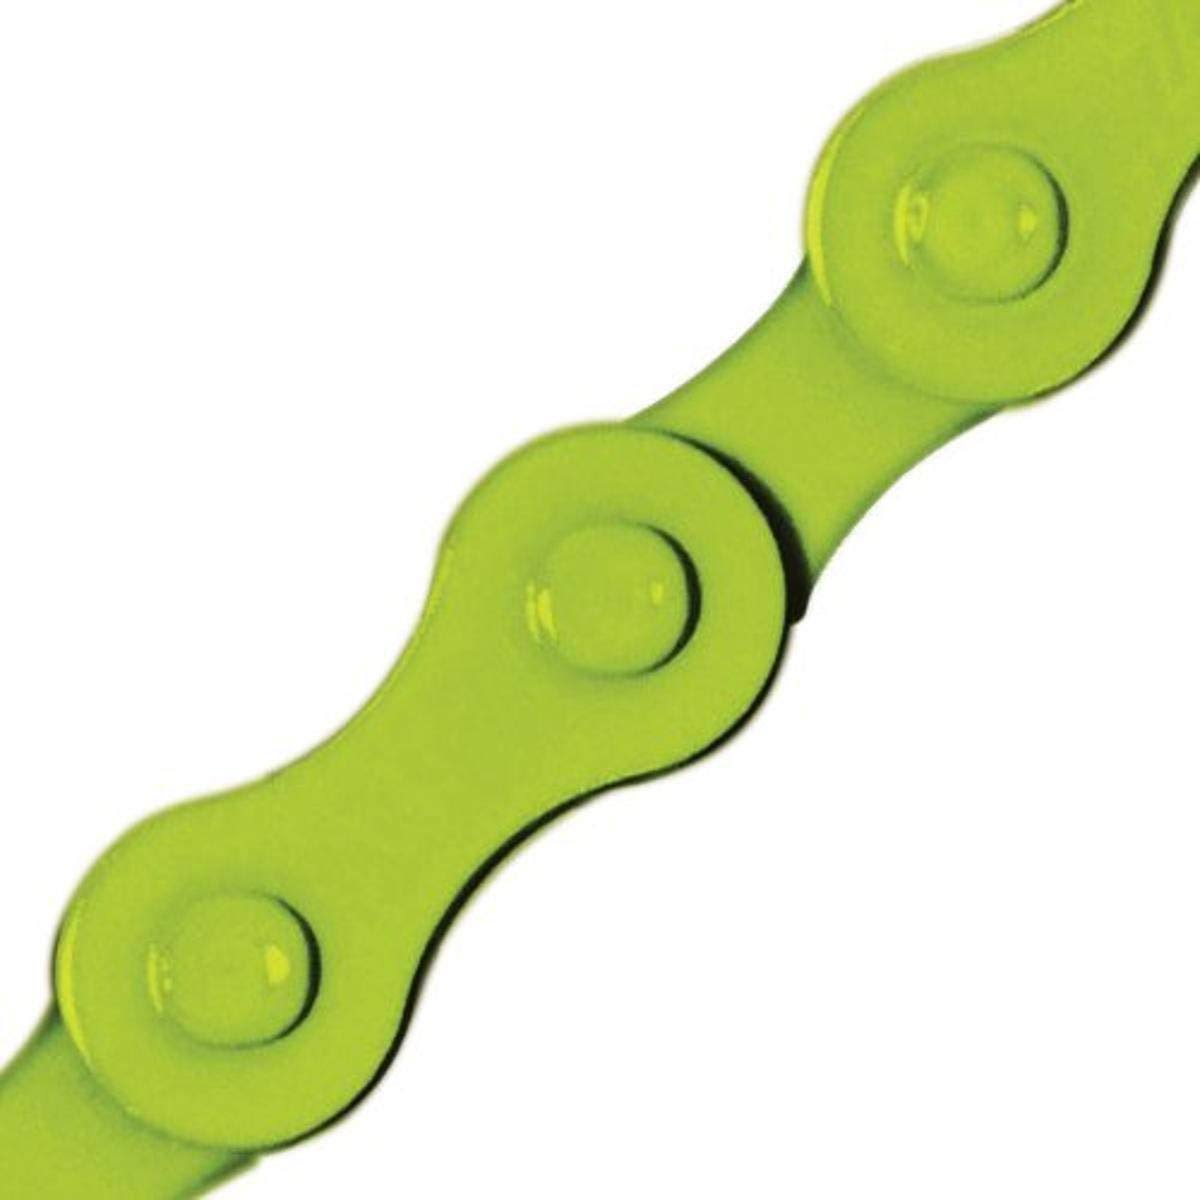 KMC S1 Single Speed Chain - 1/2" x 1/8", 112 Links, Green